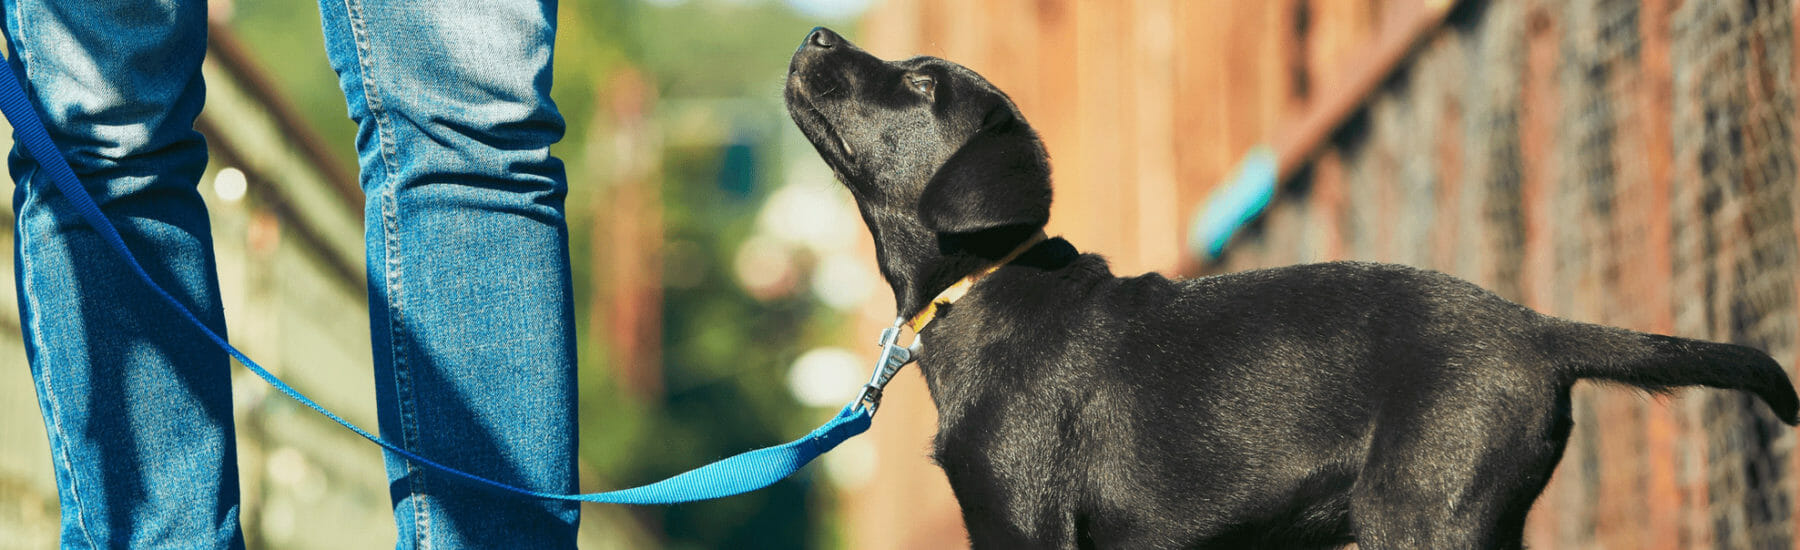 Black dog on a blue leash